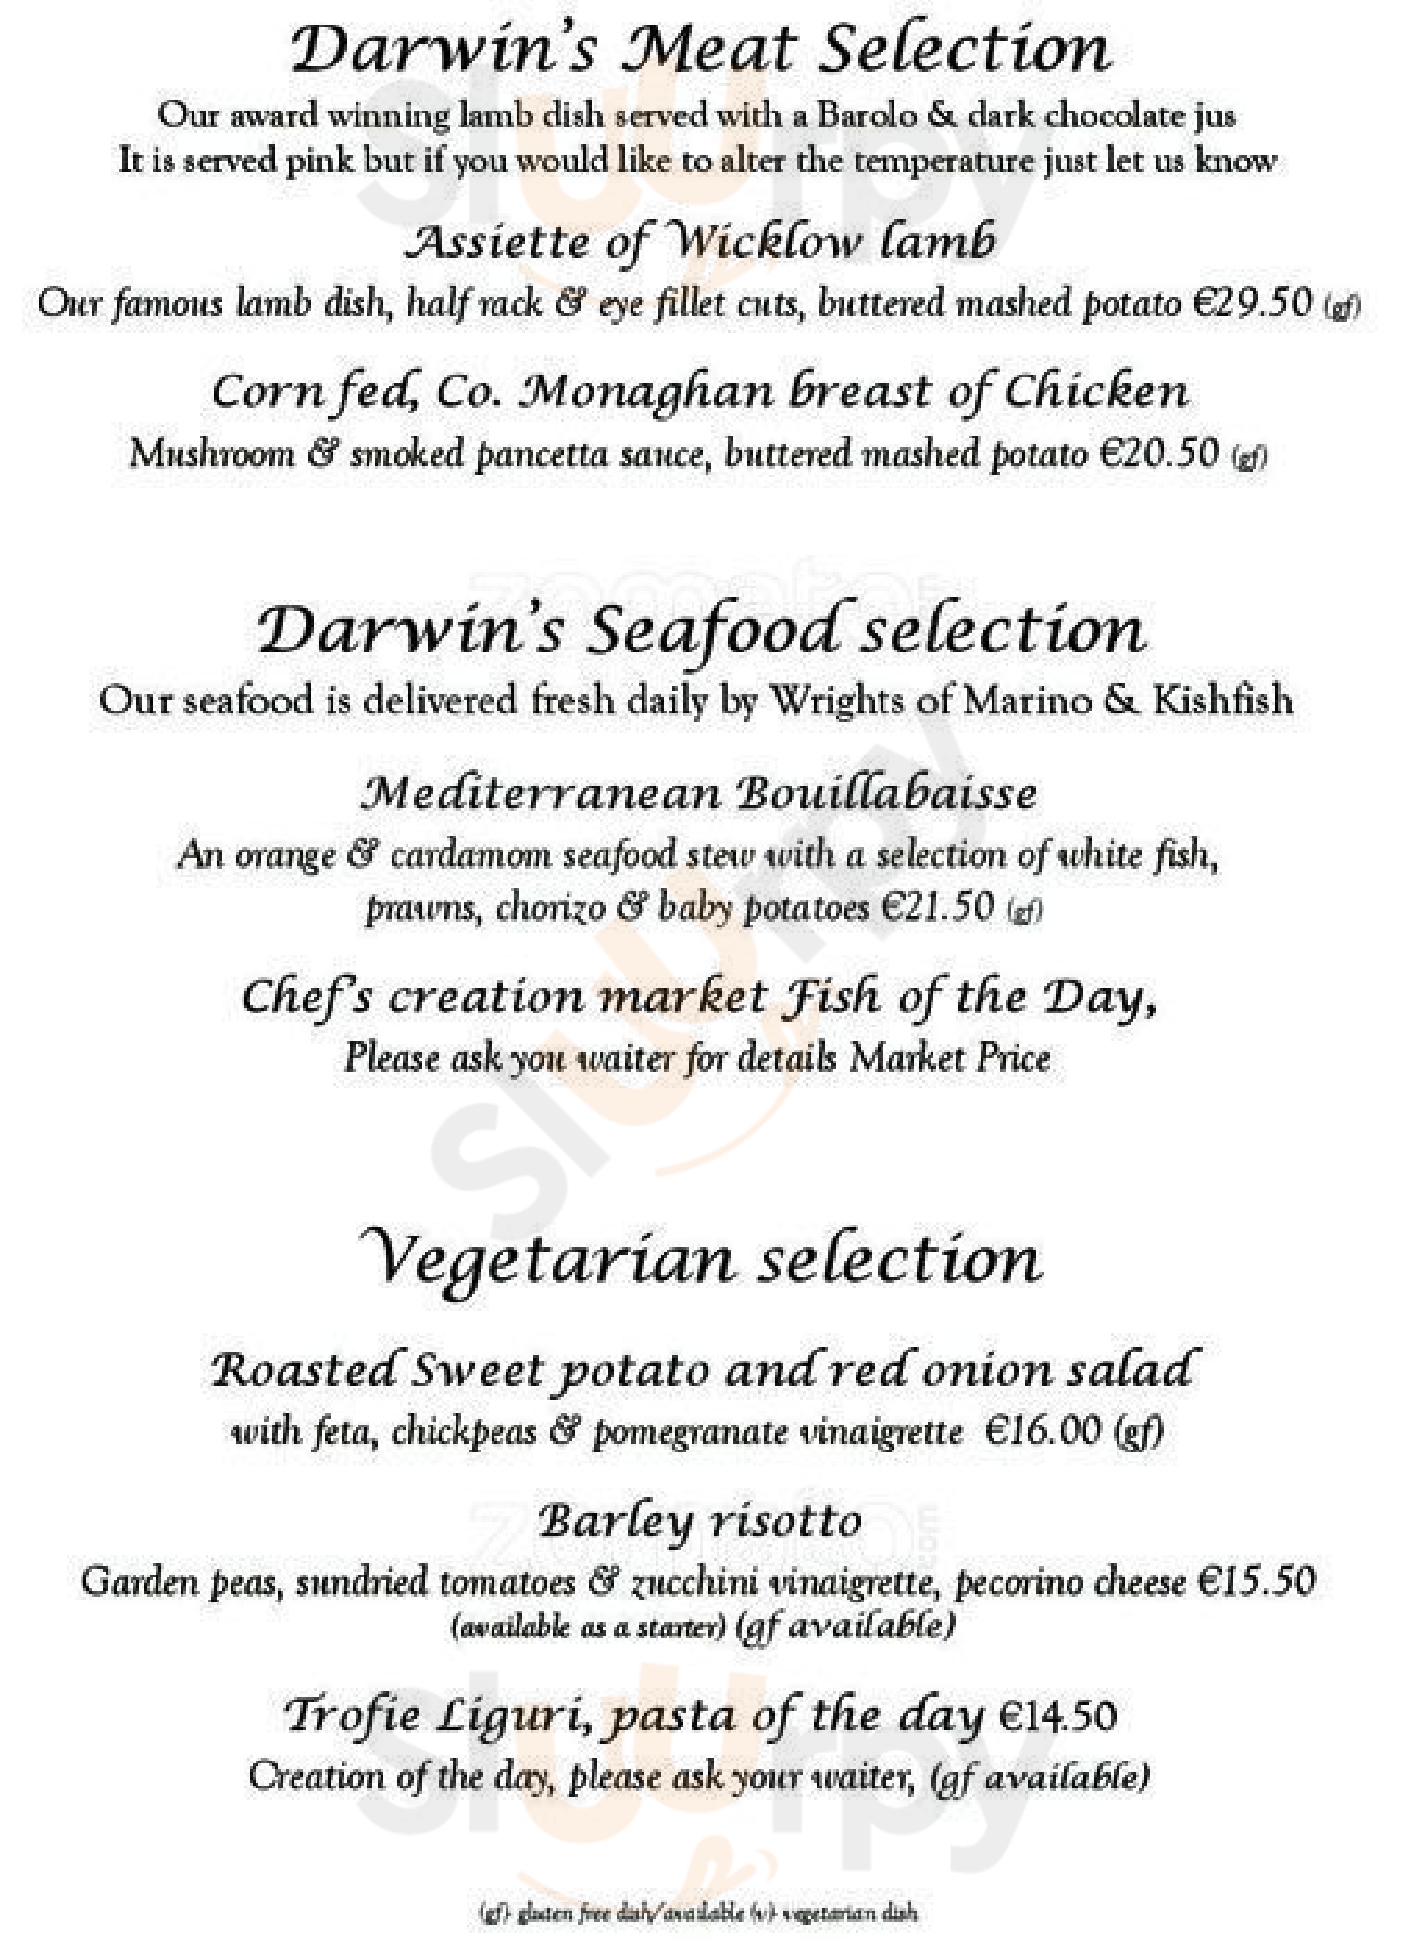 Darwins Restaurant Dublin Menu - 1